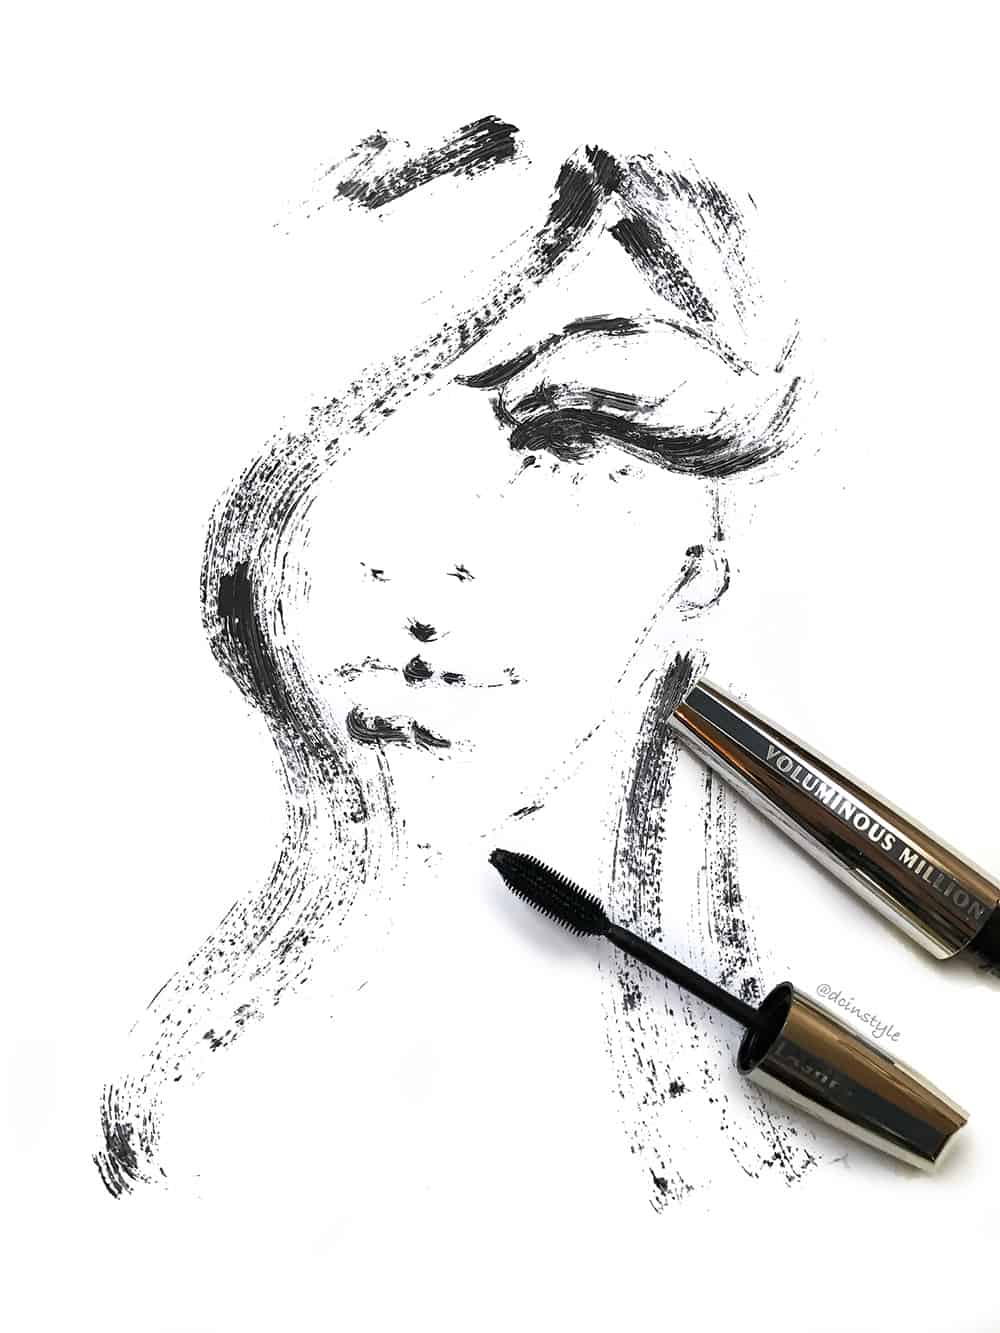 fashion illustration created with mascara